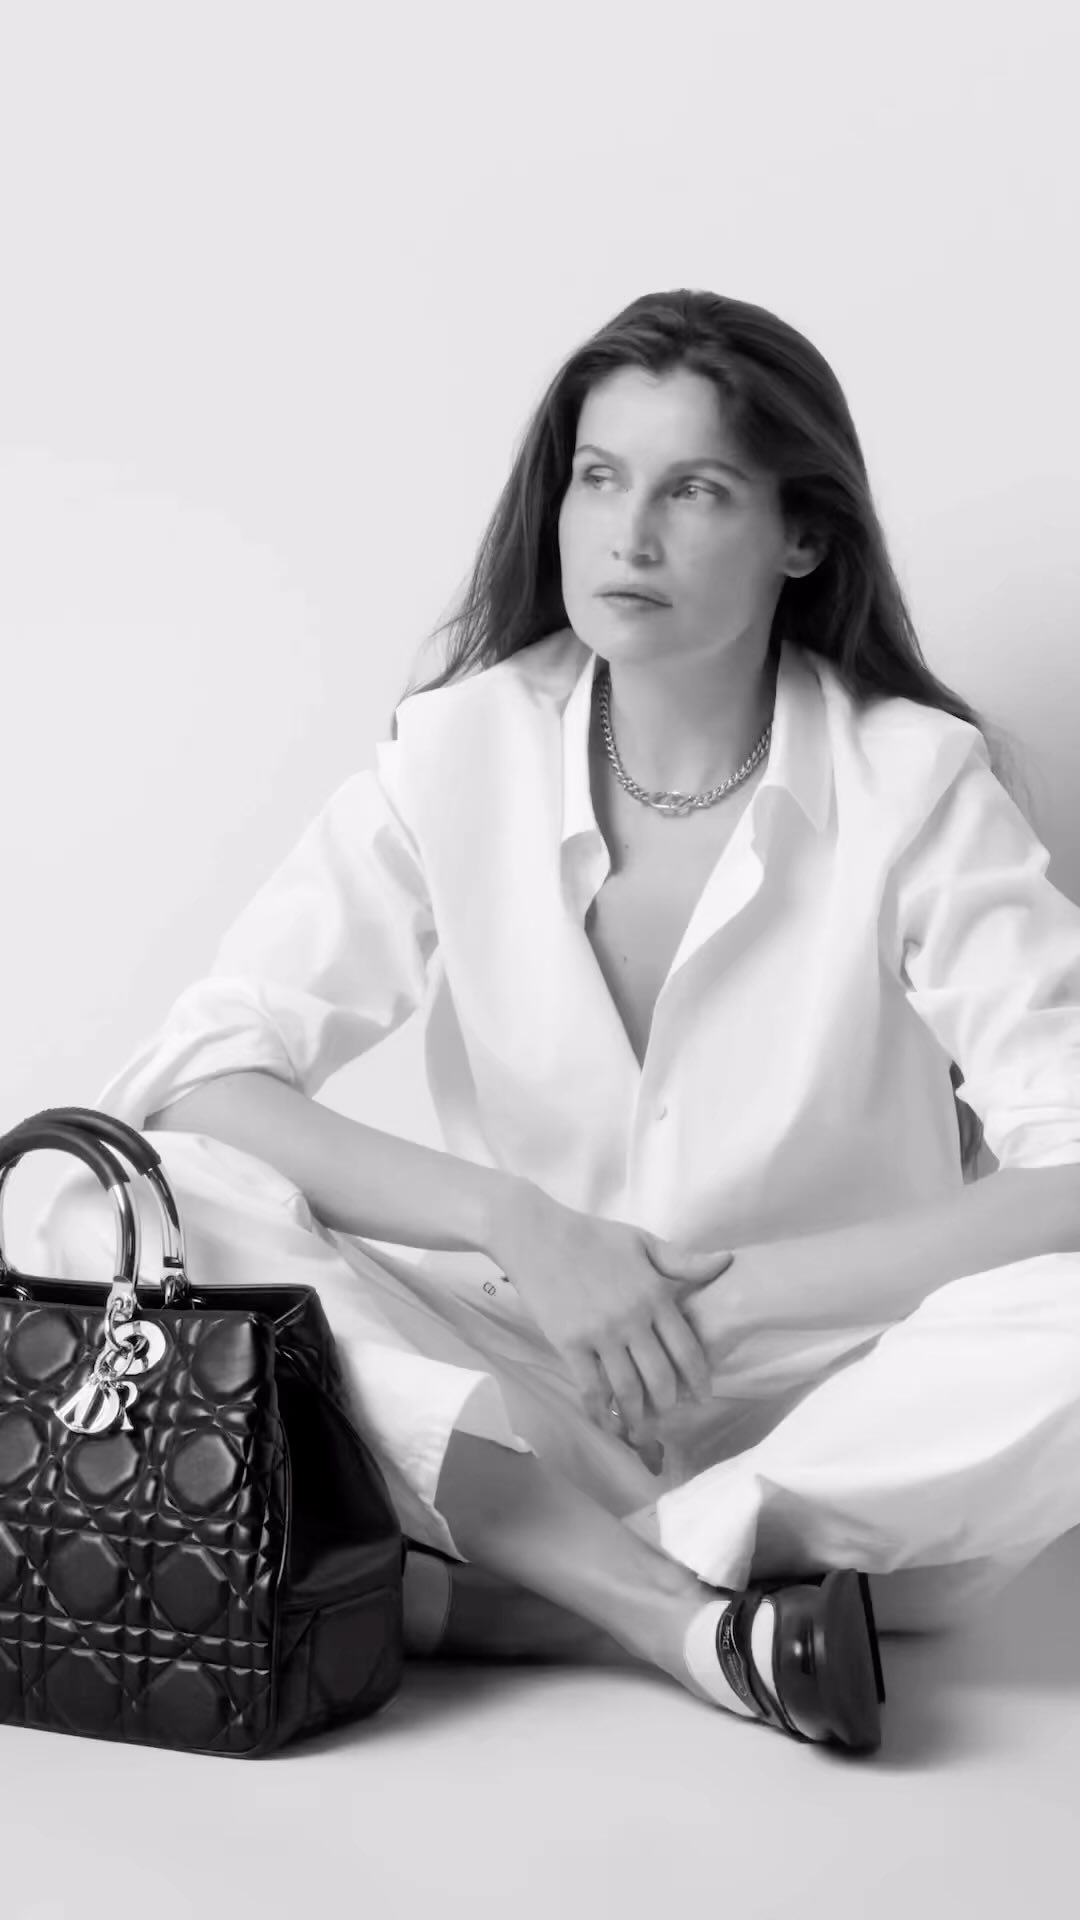 Campagne pour le nouveau sac Dior Lady 9522 par Maria Grazia Chiuri. Video : @BrigitteLacombe #DIOR #LadyDior #DiorLady9522 #MariaGraziaChiuri #BrigitteLacombe